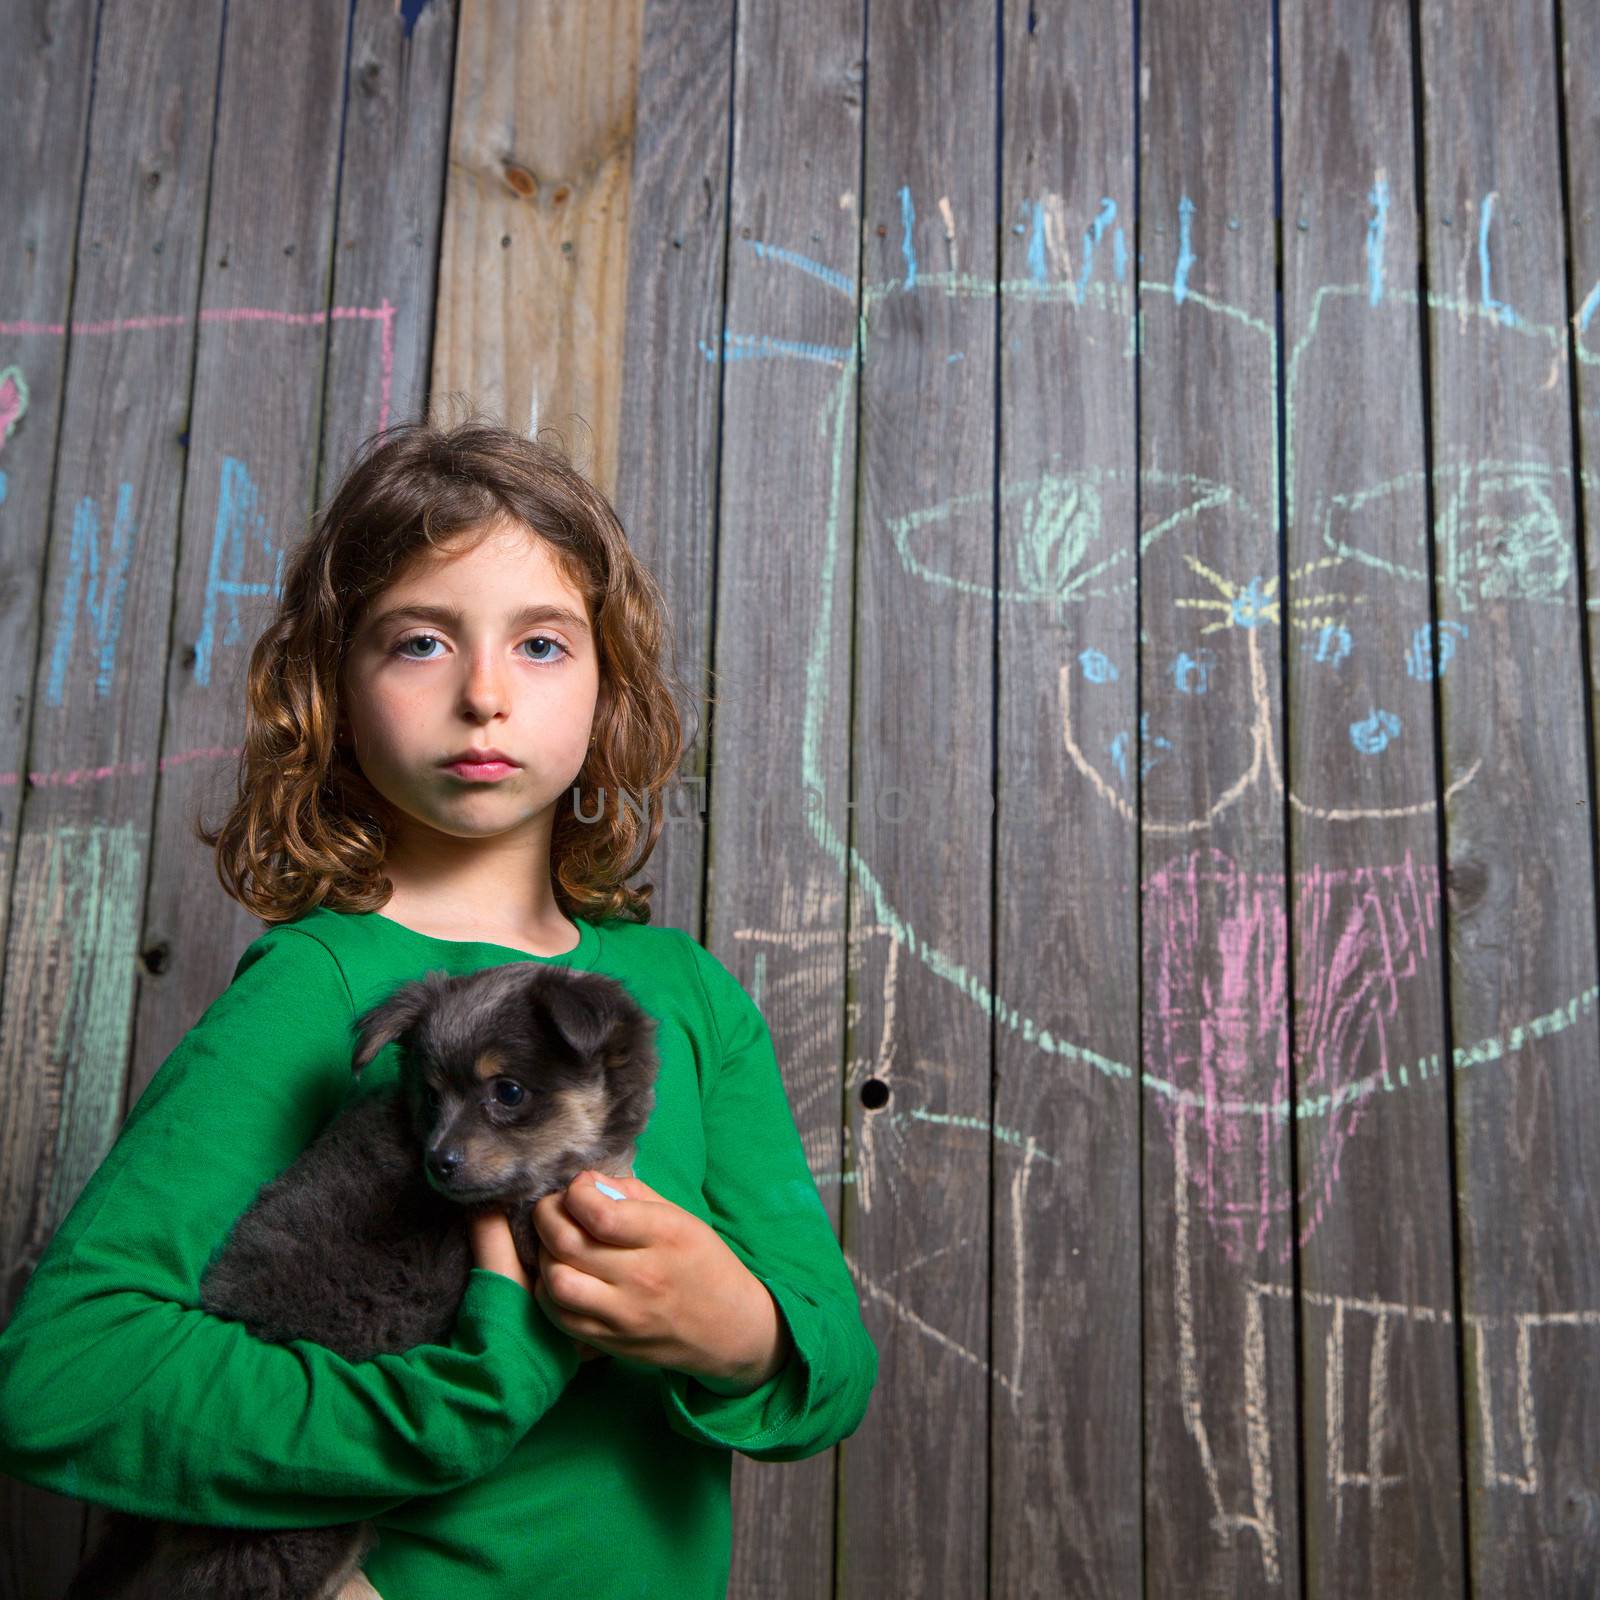 children girl holding puppy dog on backyard wood fence by lunamarina